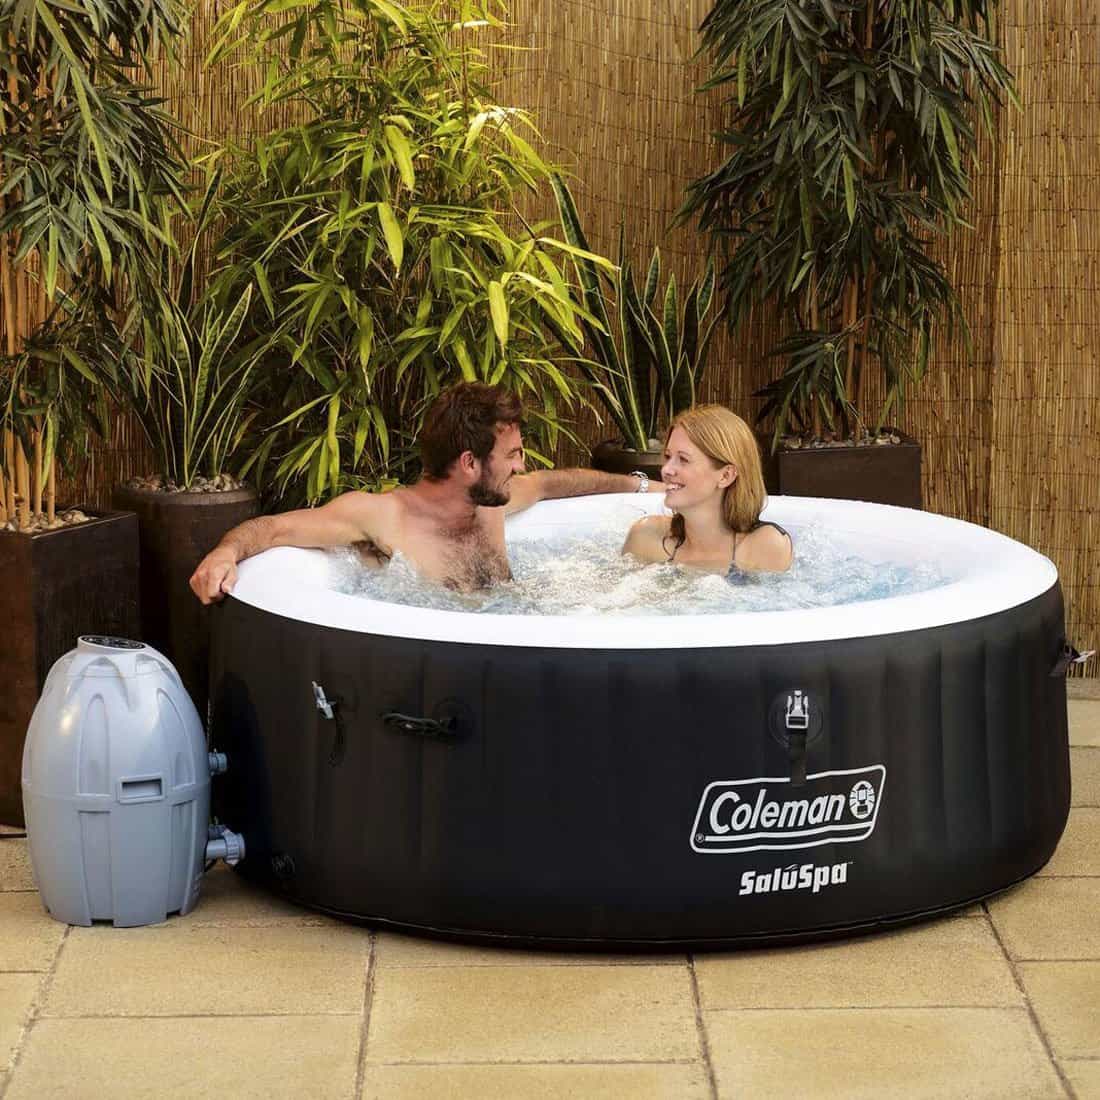 Coleman Saluspa 4-person portable hot tub